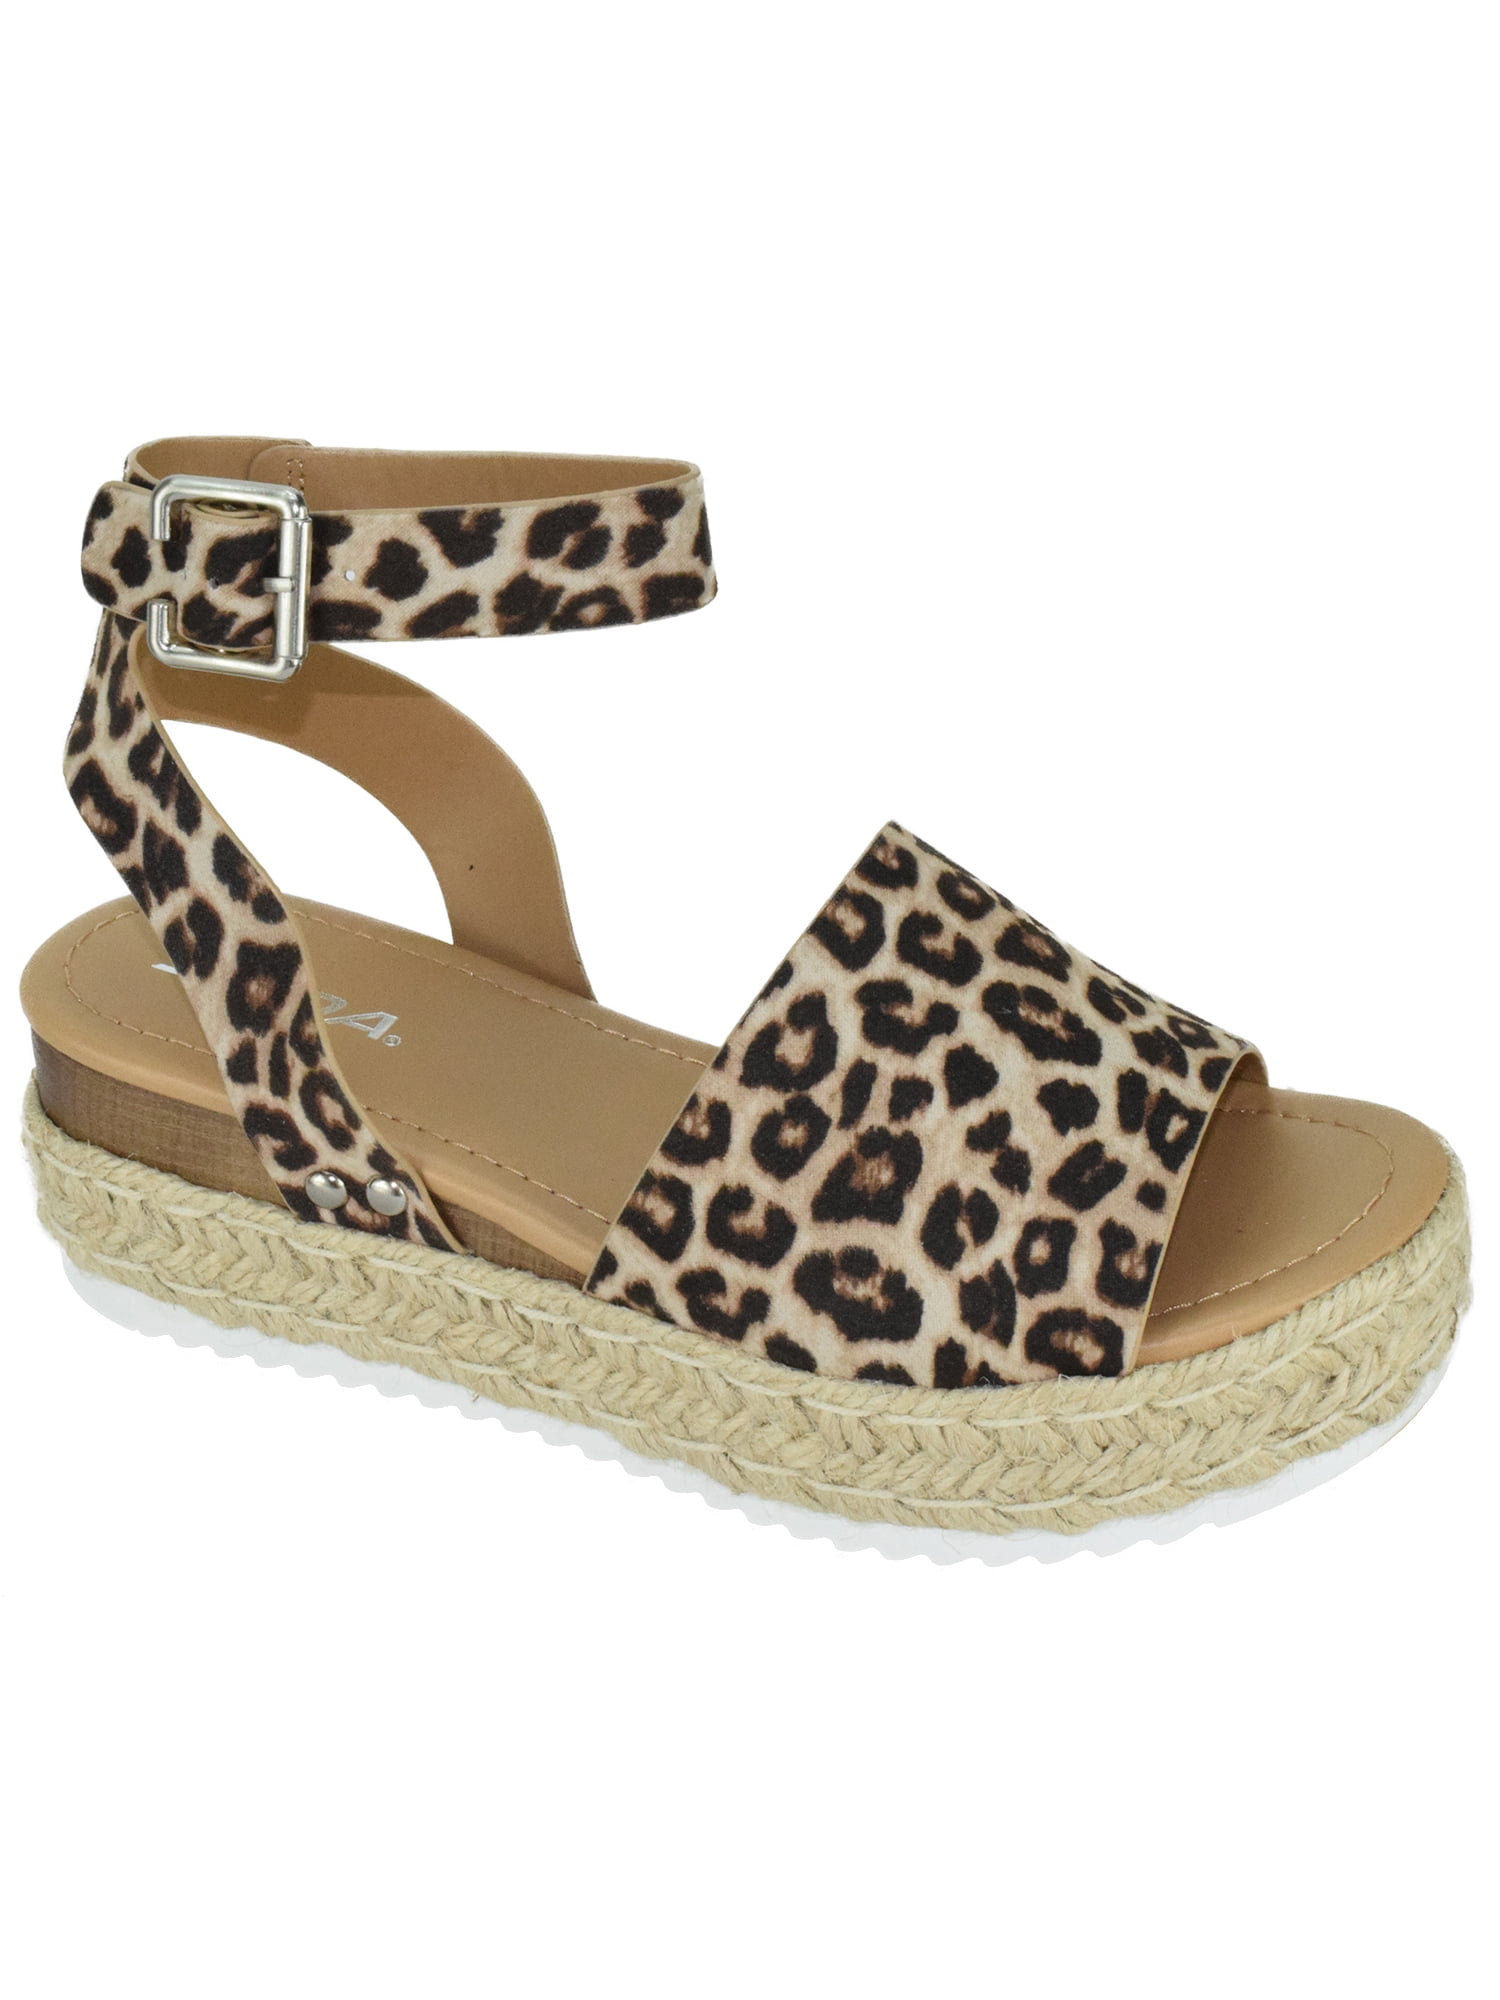 Kanzd Sandals for Women Leapard Snake Patten Wedge Heel Open Toe Roman Platform Sandals Summer Dressy Sandals Shoes